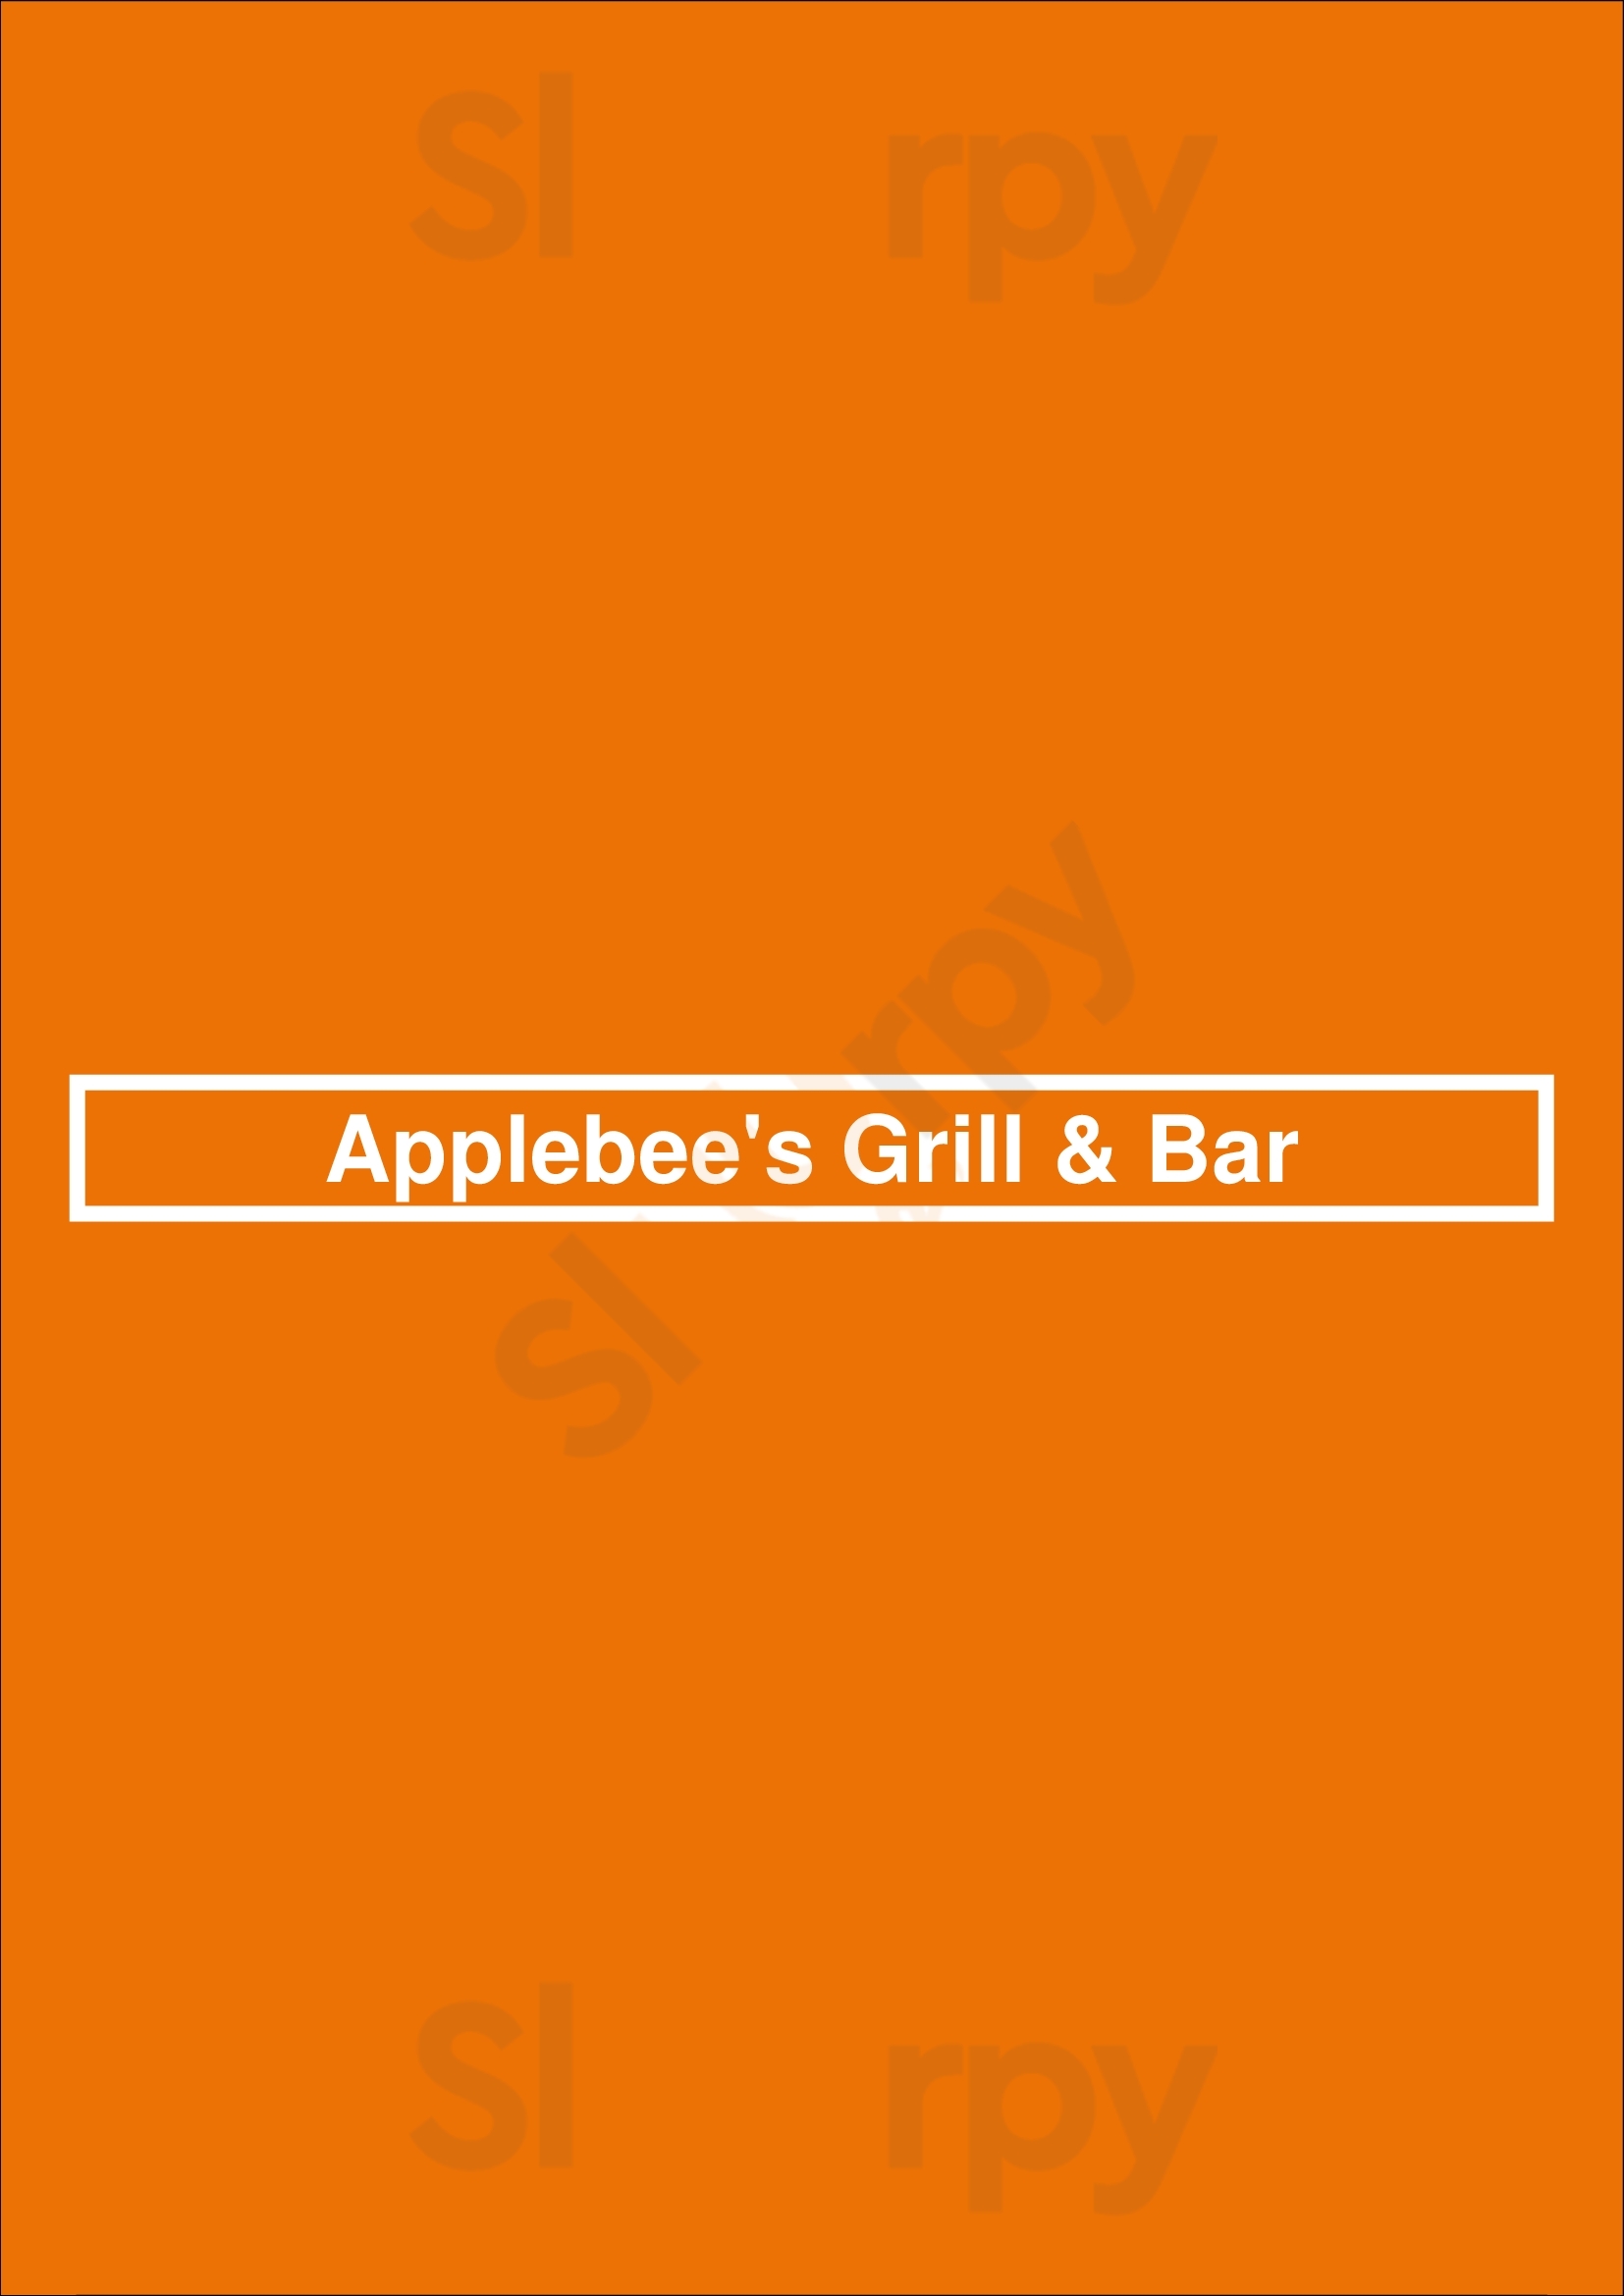 Applebee's Grill & Bar Port Orange Menu - 1